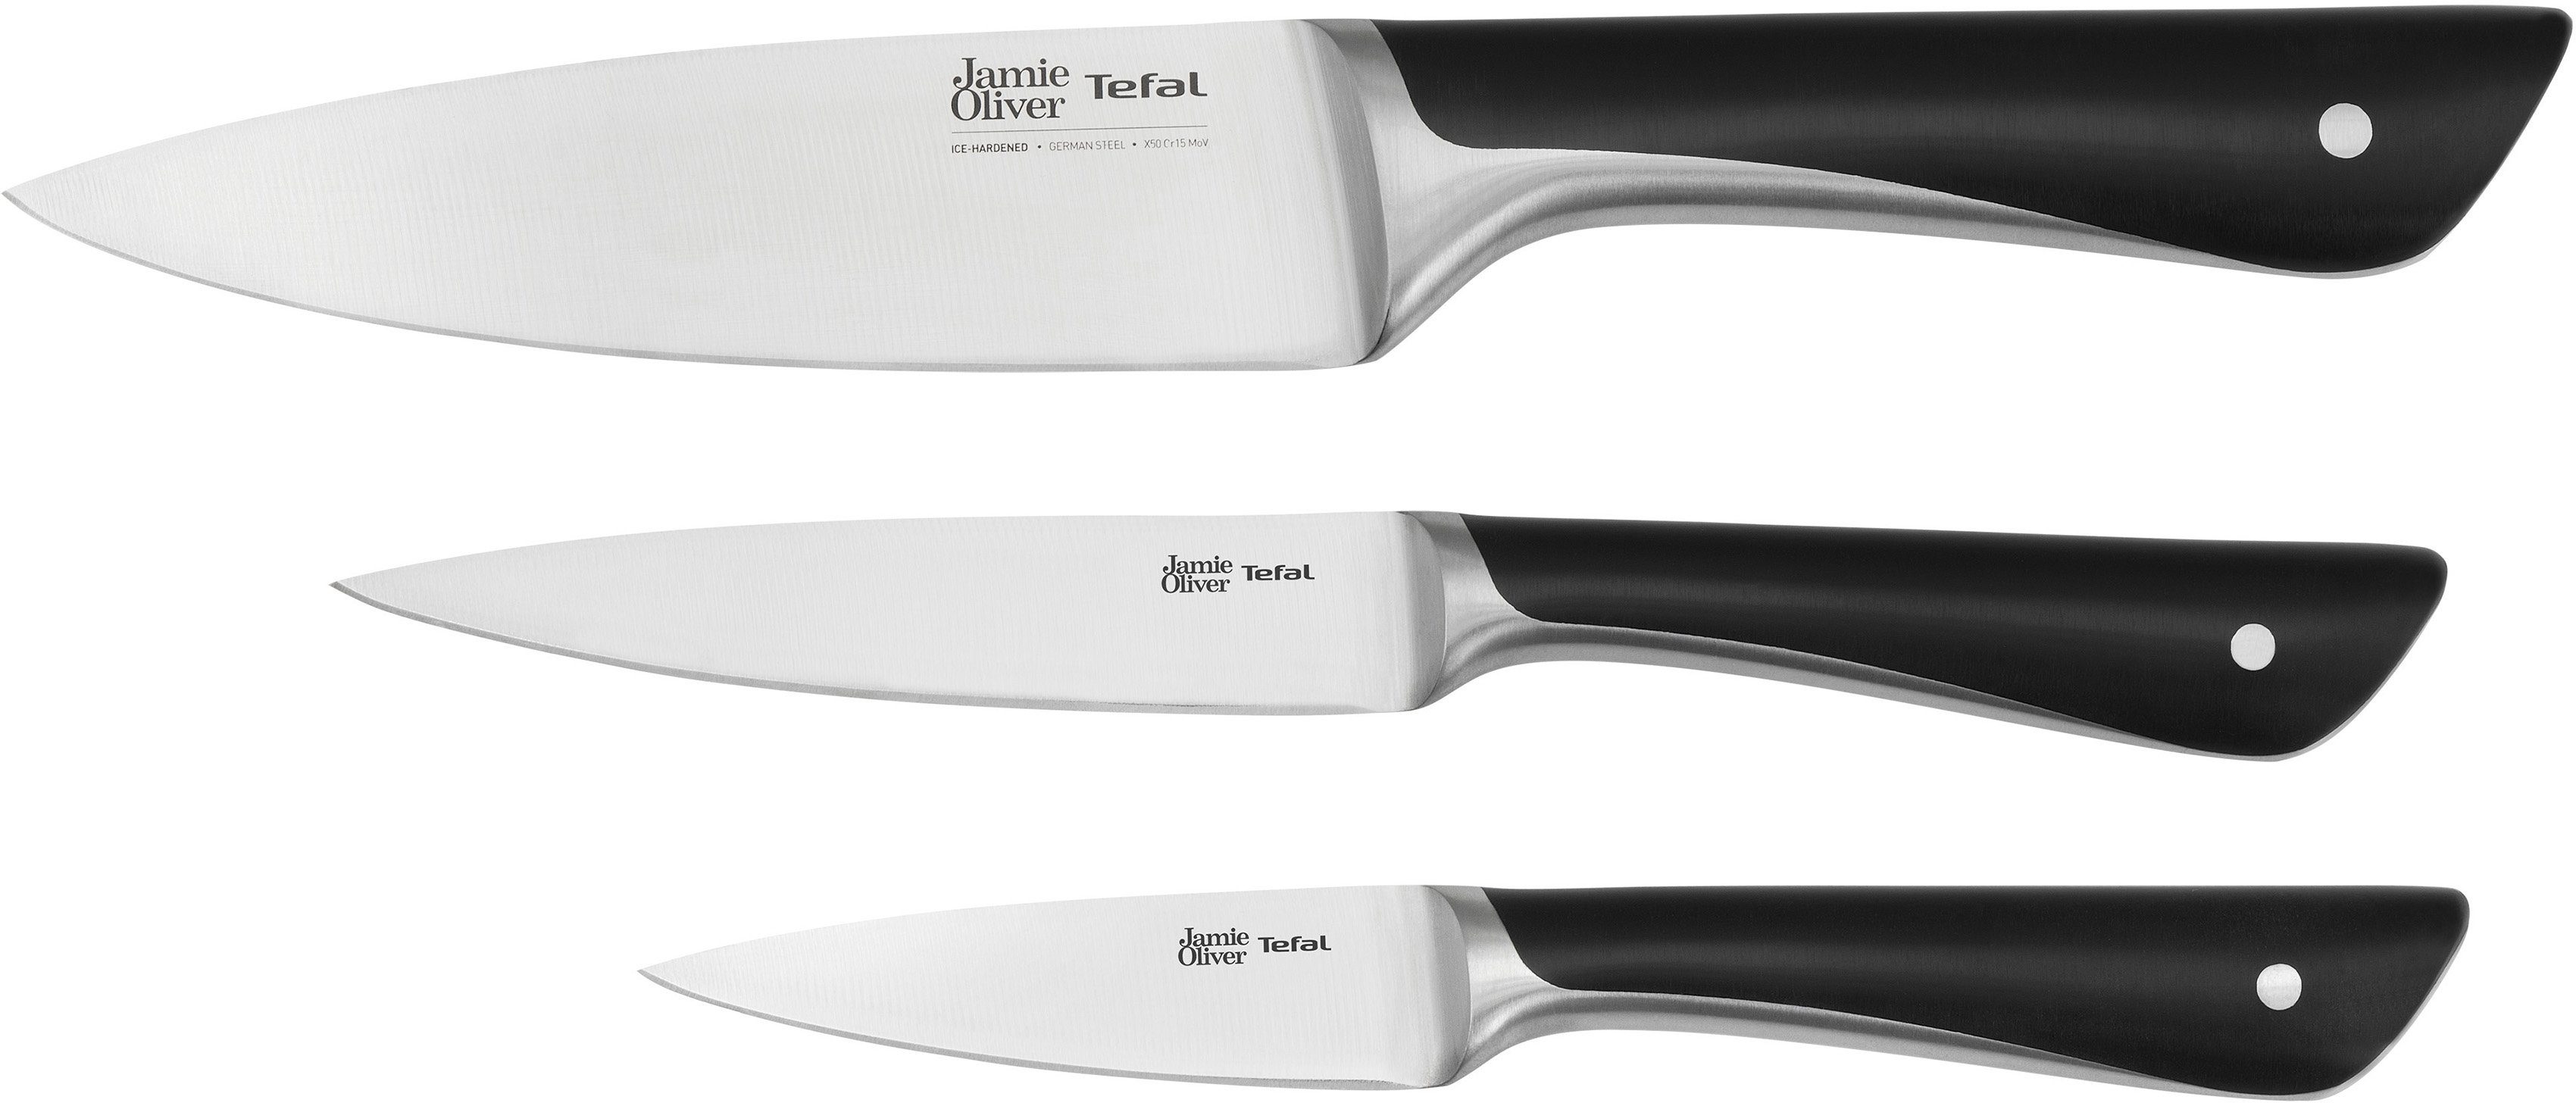 hohe Tefal Messer-Set Jamie 3-tlg), Leistung, Oliver widerstandsfähig/langlebig Design, unverwechselbares K267S3 (Set,